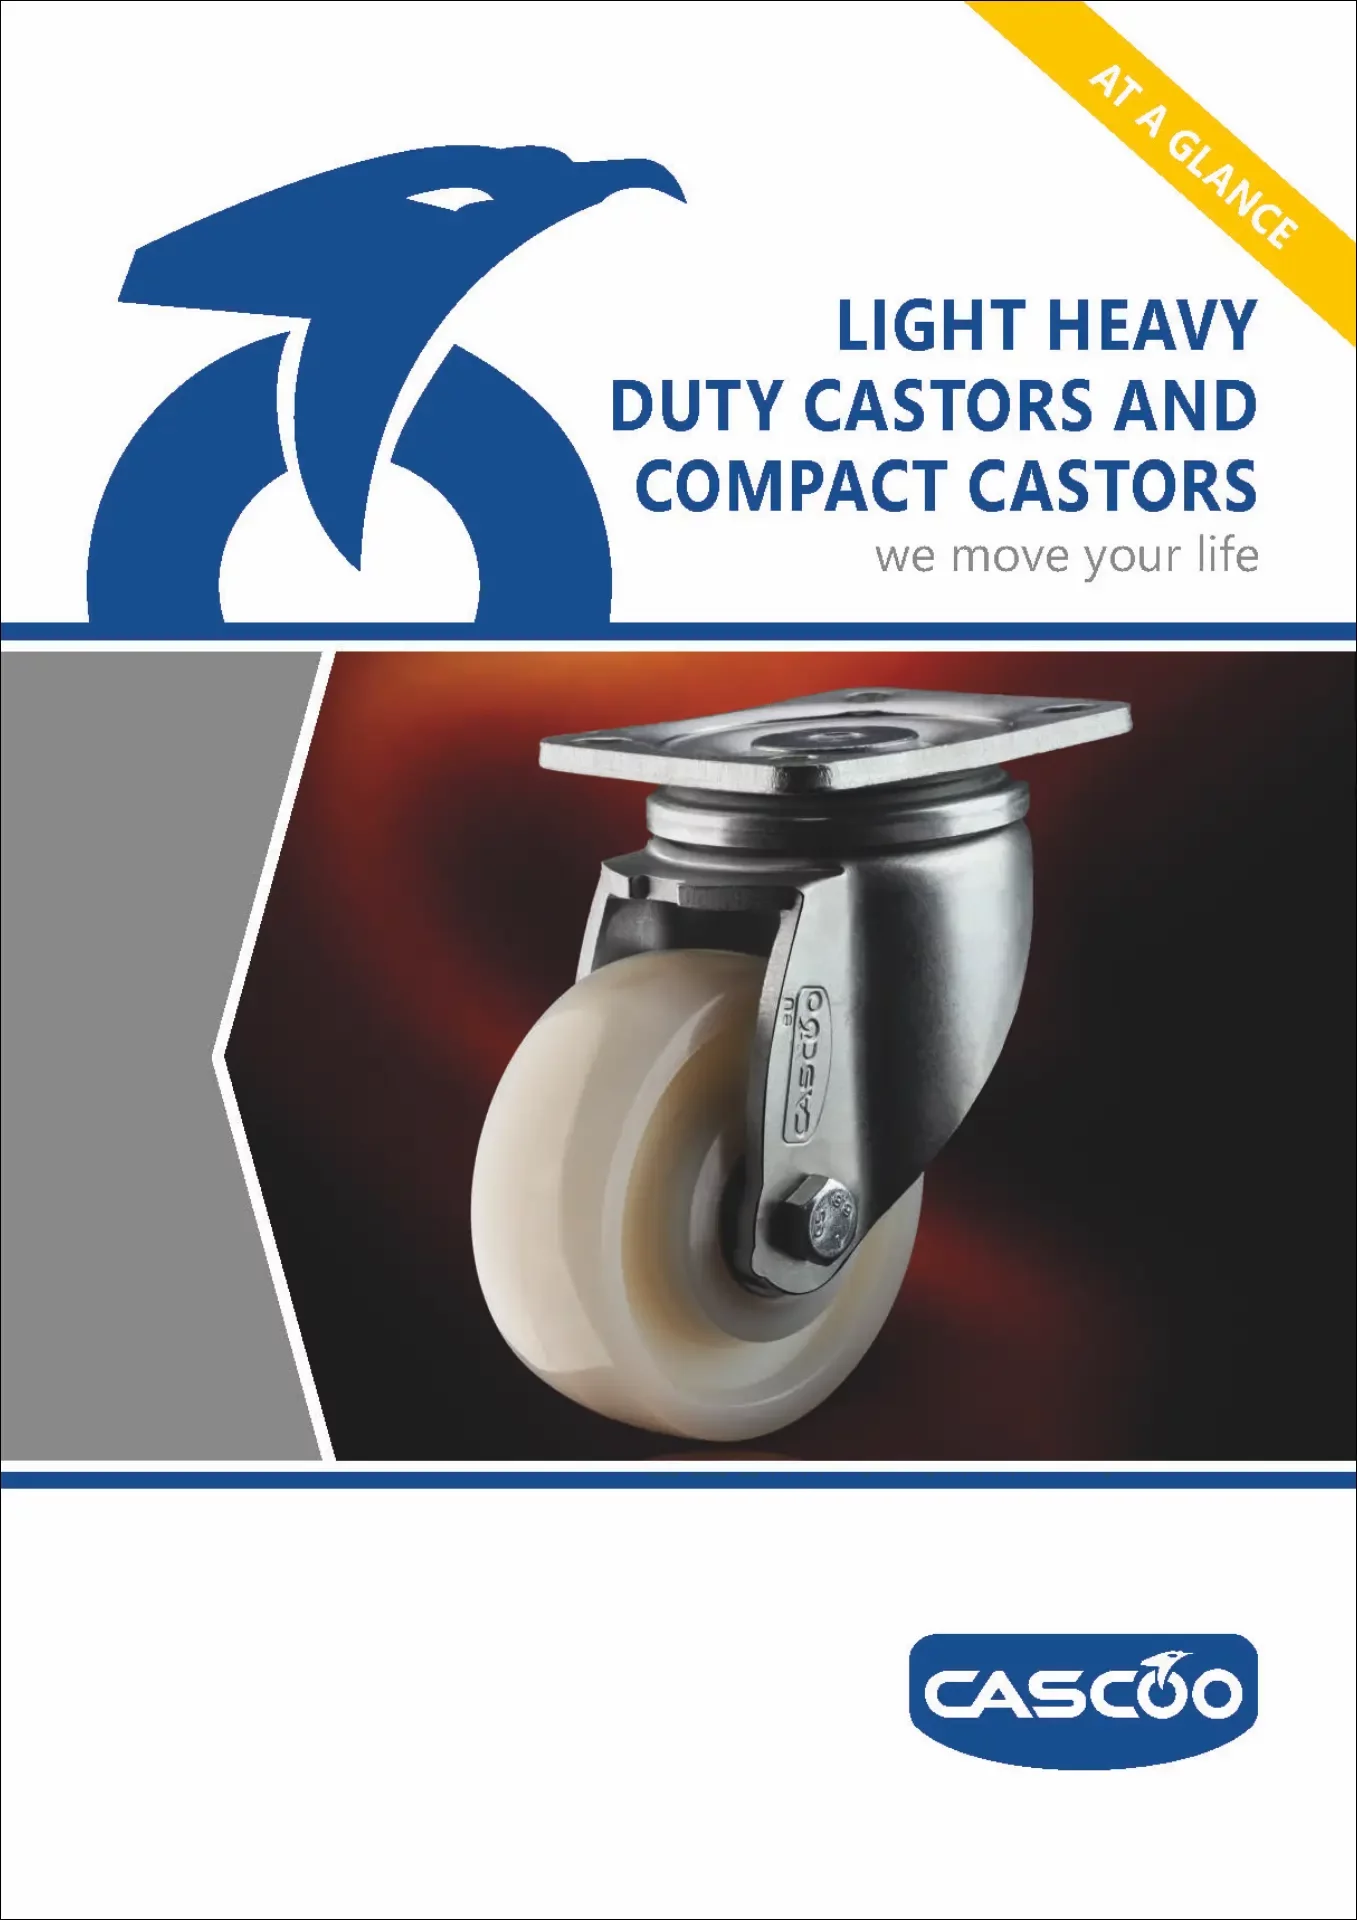 CASCOO EN Light Heavy Duty and Compact Castors